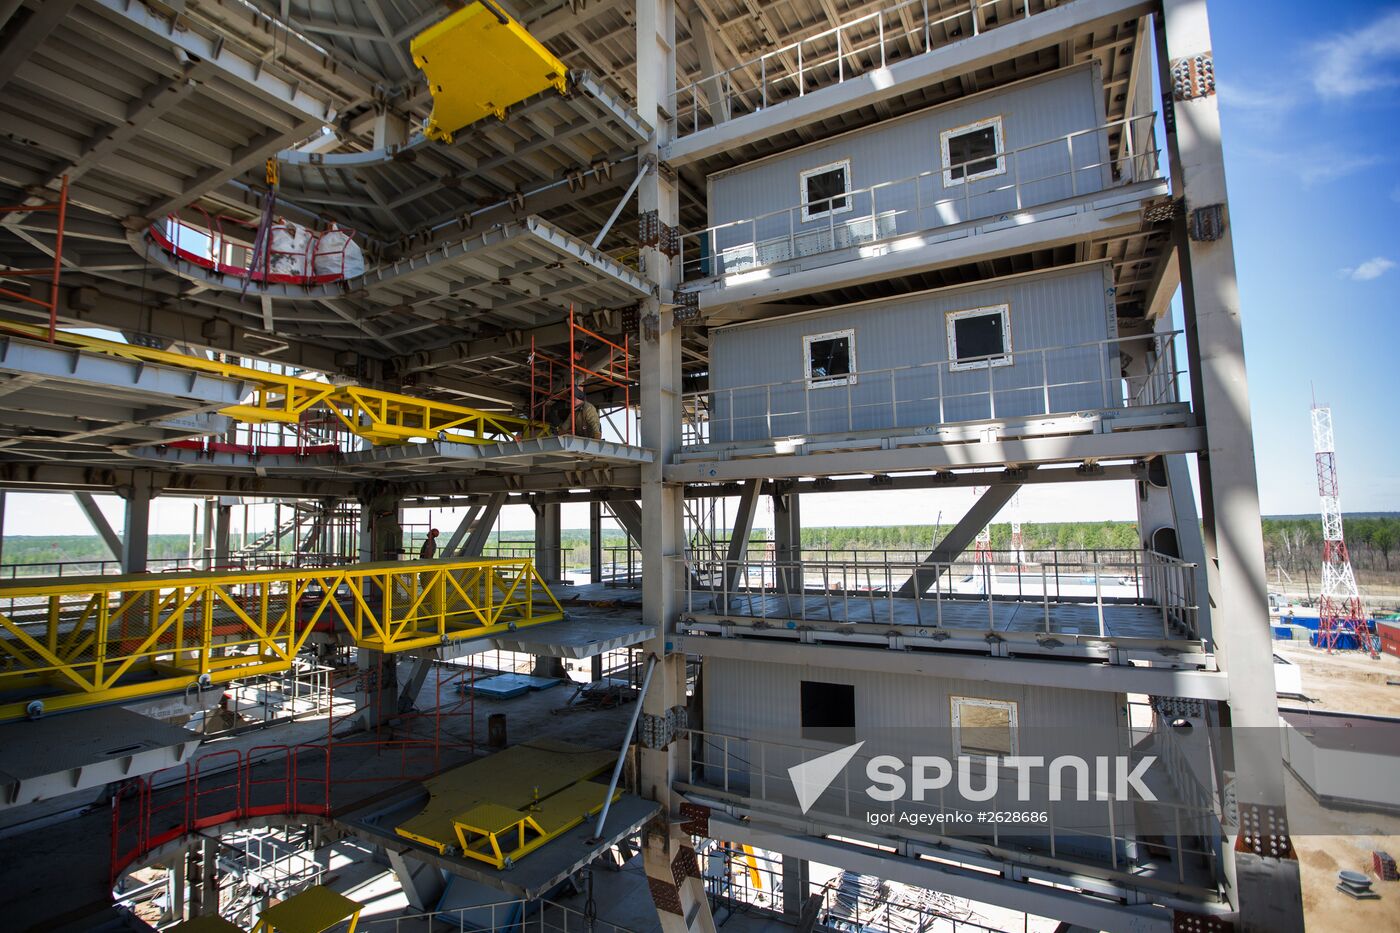 Equipment installation at Vostochny Cosmodrome in Amur Region